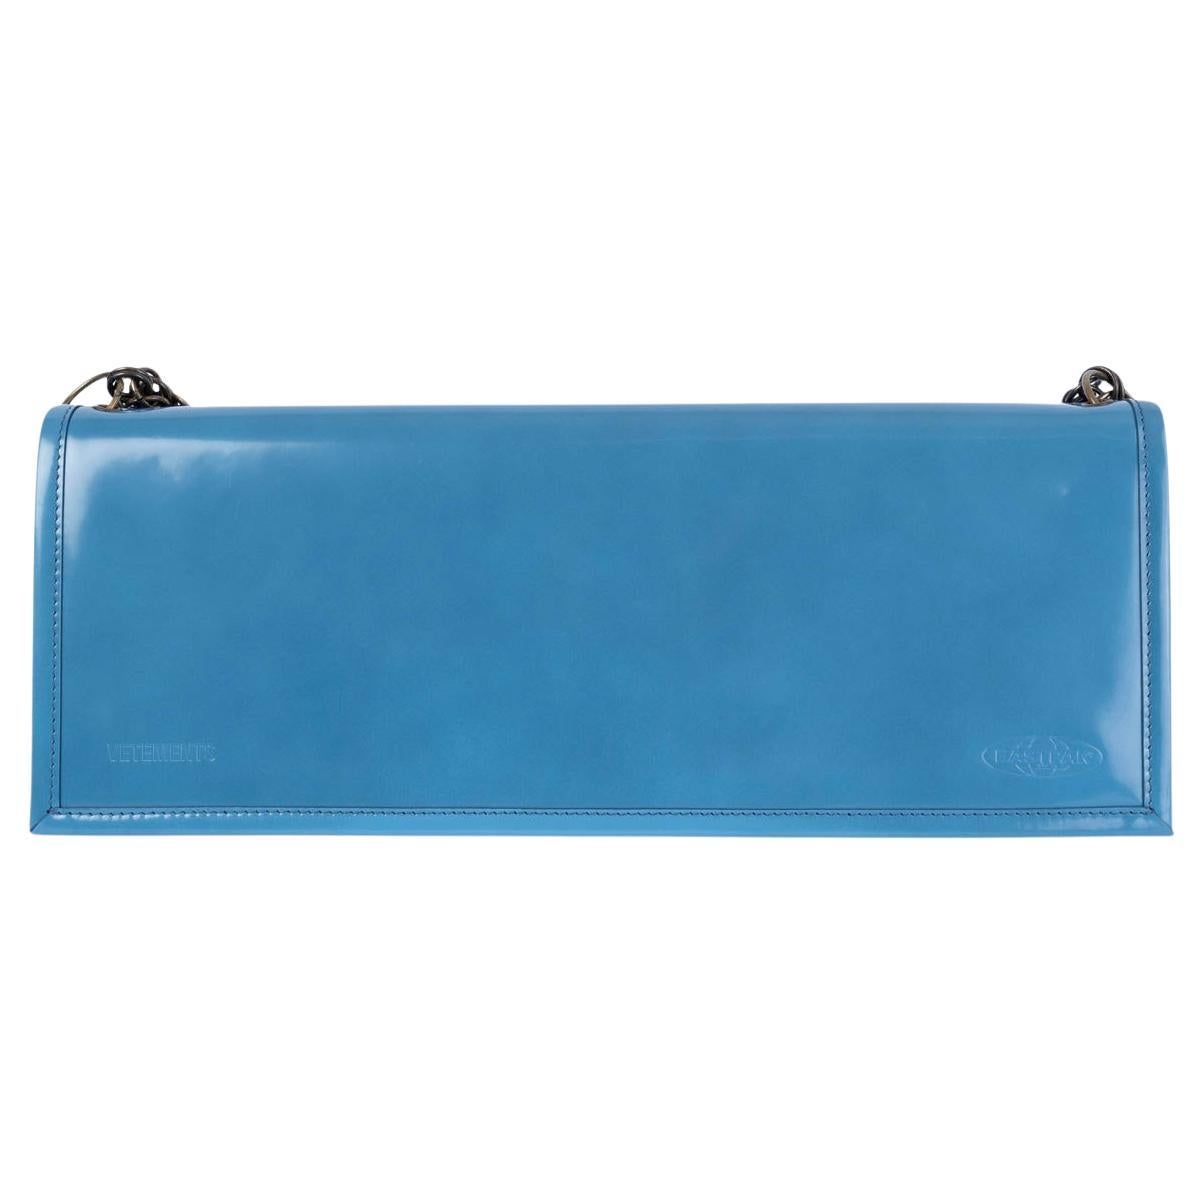 VETEMENTS x EASTPAK blue leather 2017 CHAIN Clutch Bag